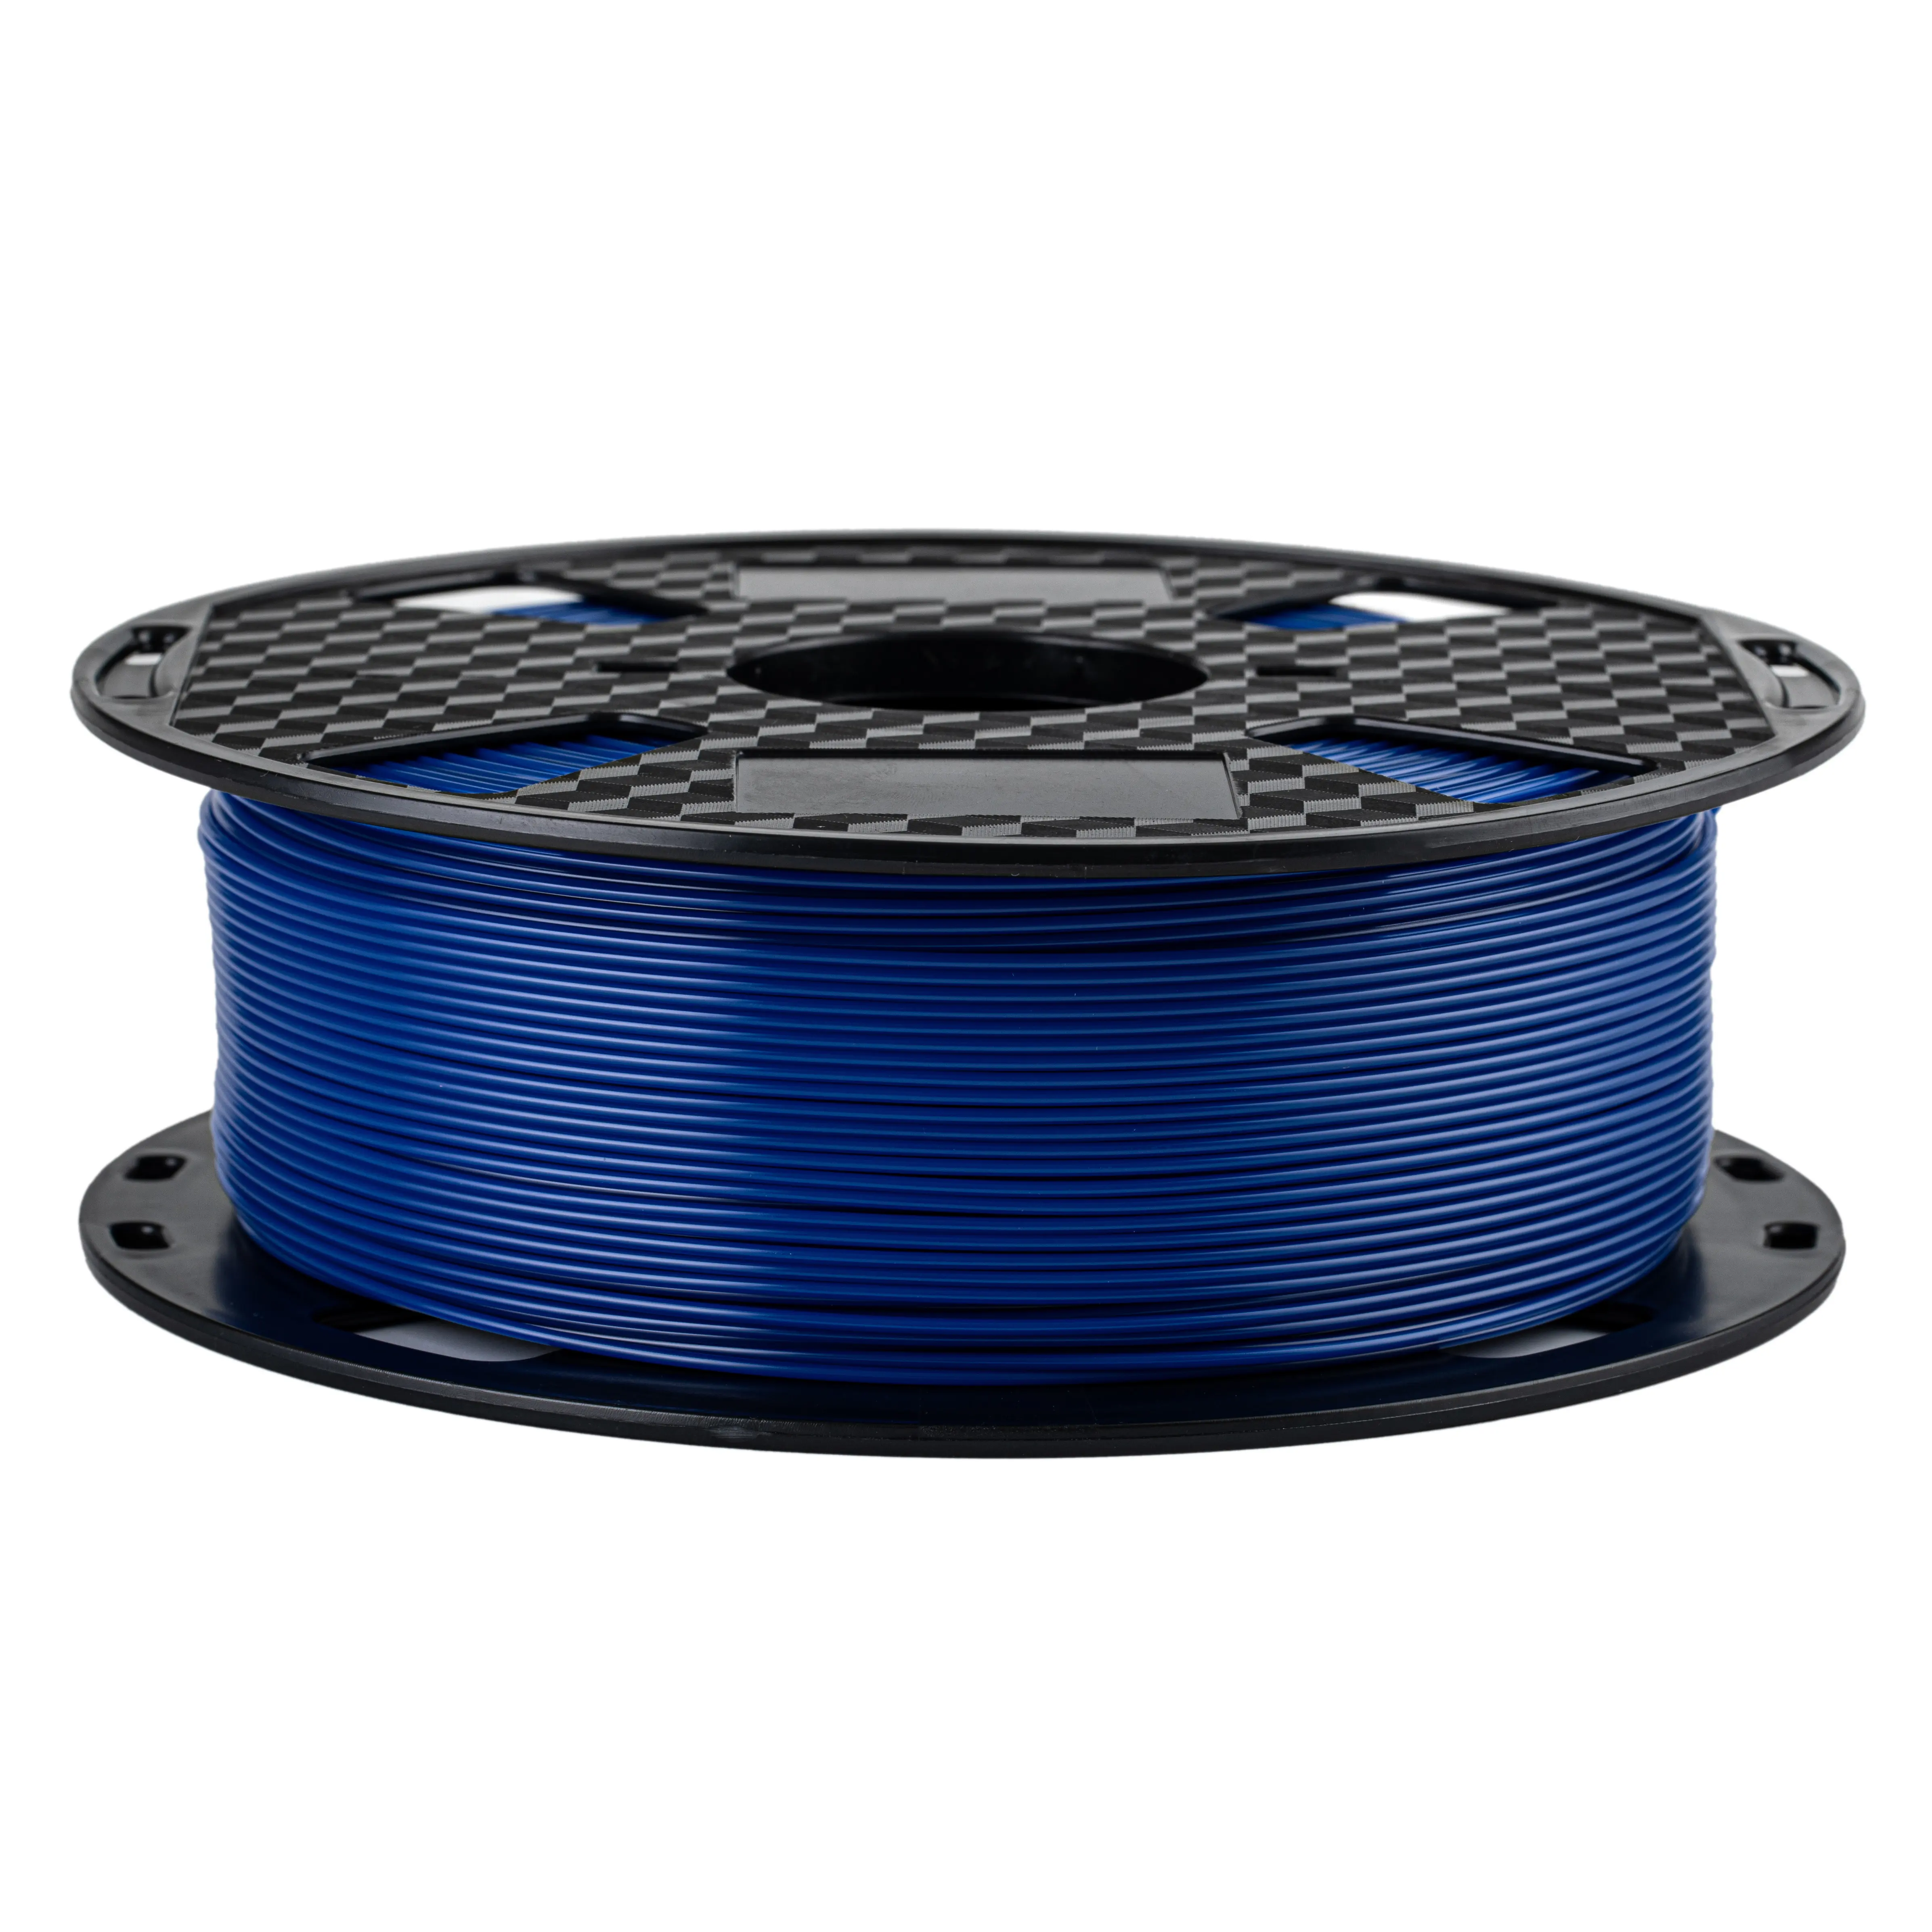 Dark Blue PETG 1.75 Printing Filament with Plastic Rods for 3D Printer